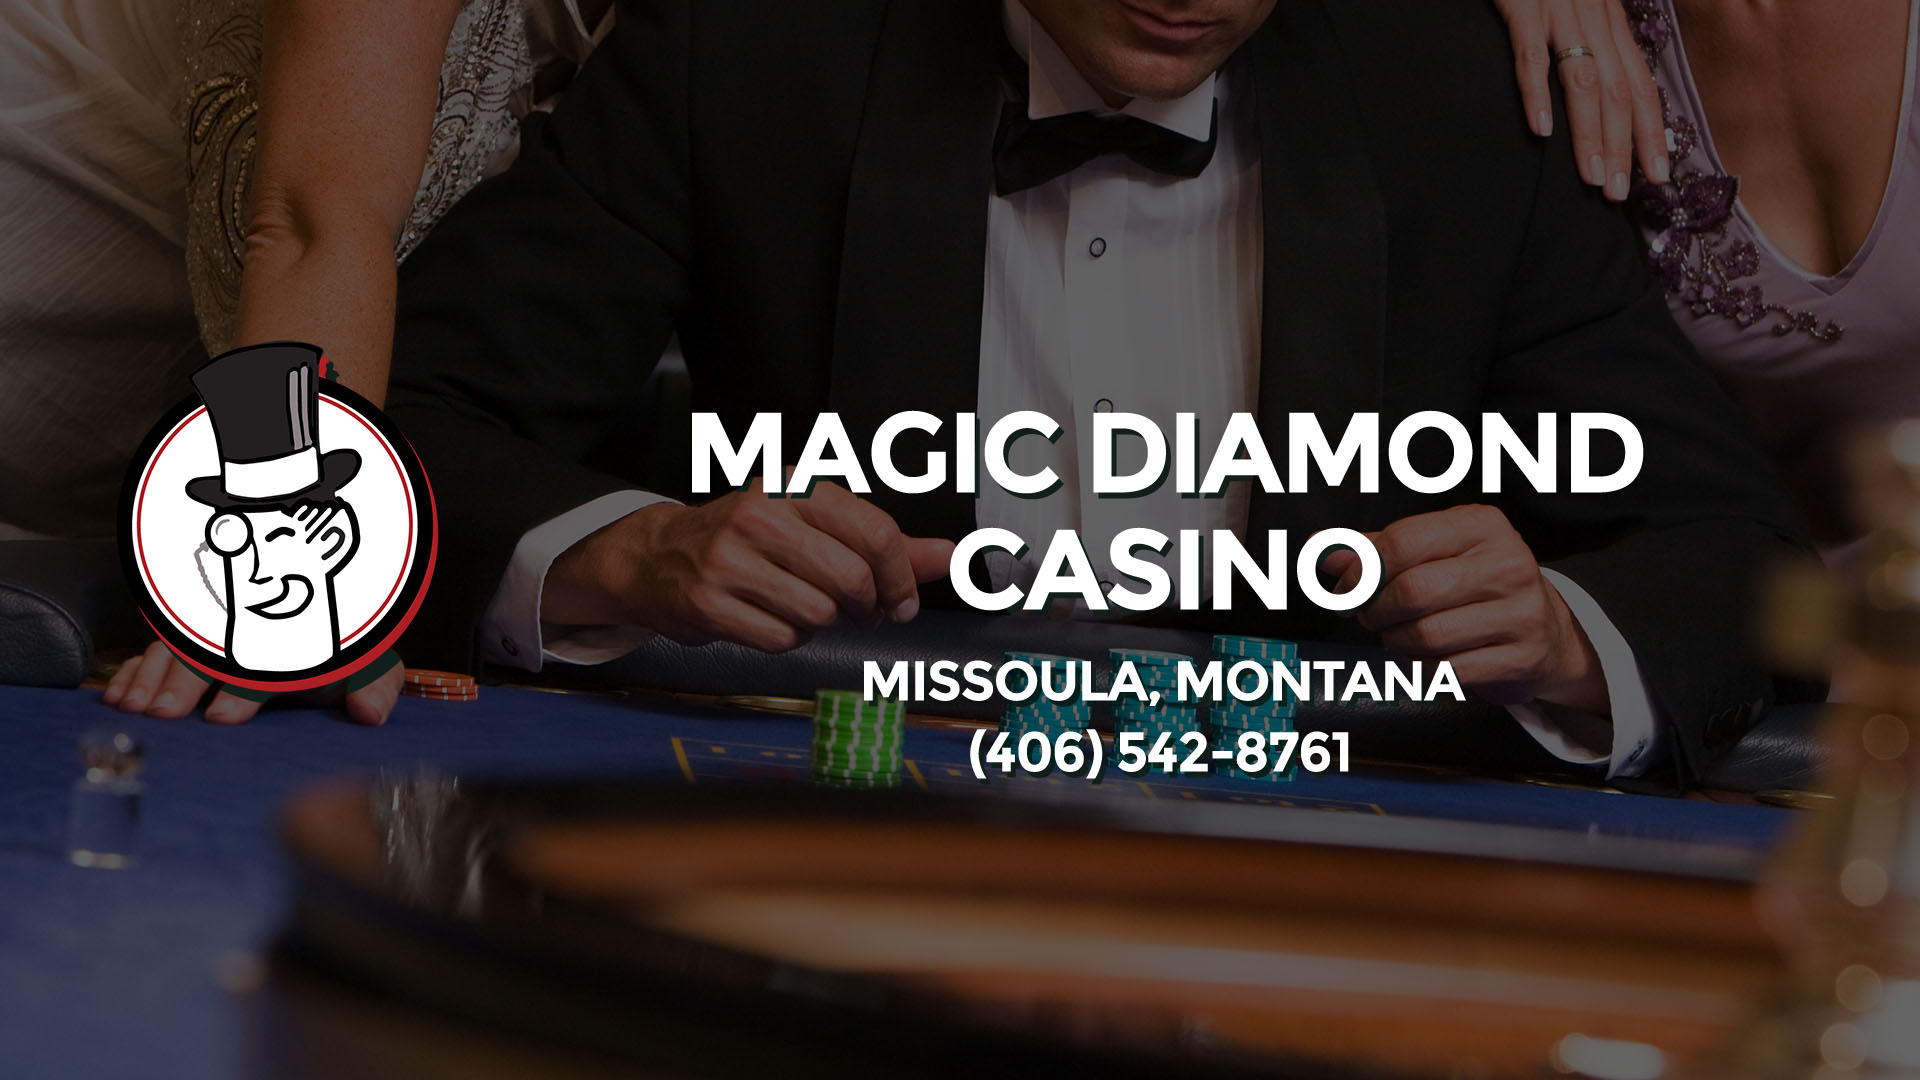 Magic diamond casino missoula mt pleasant